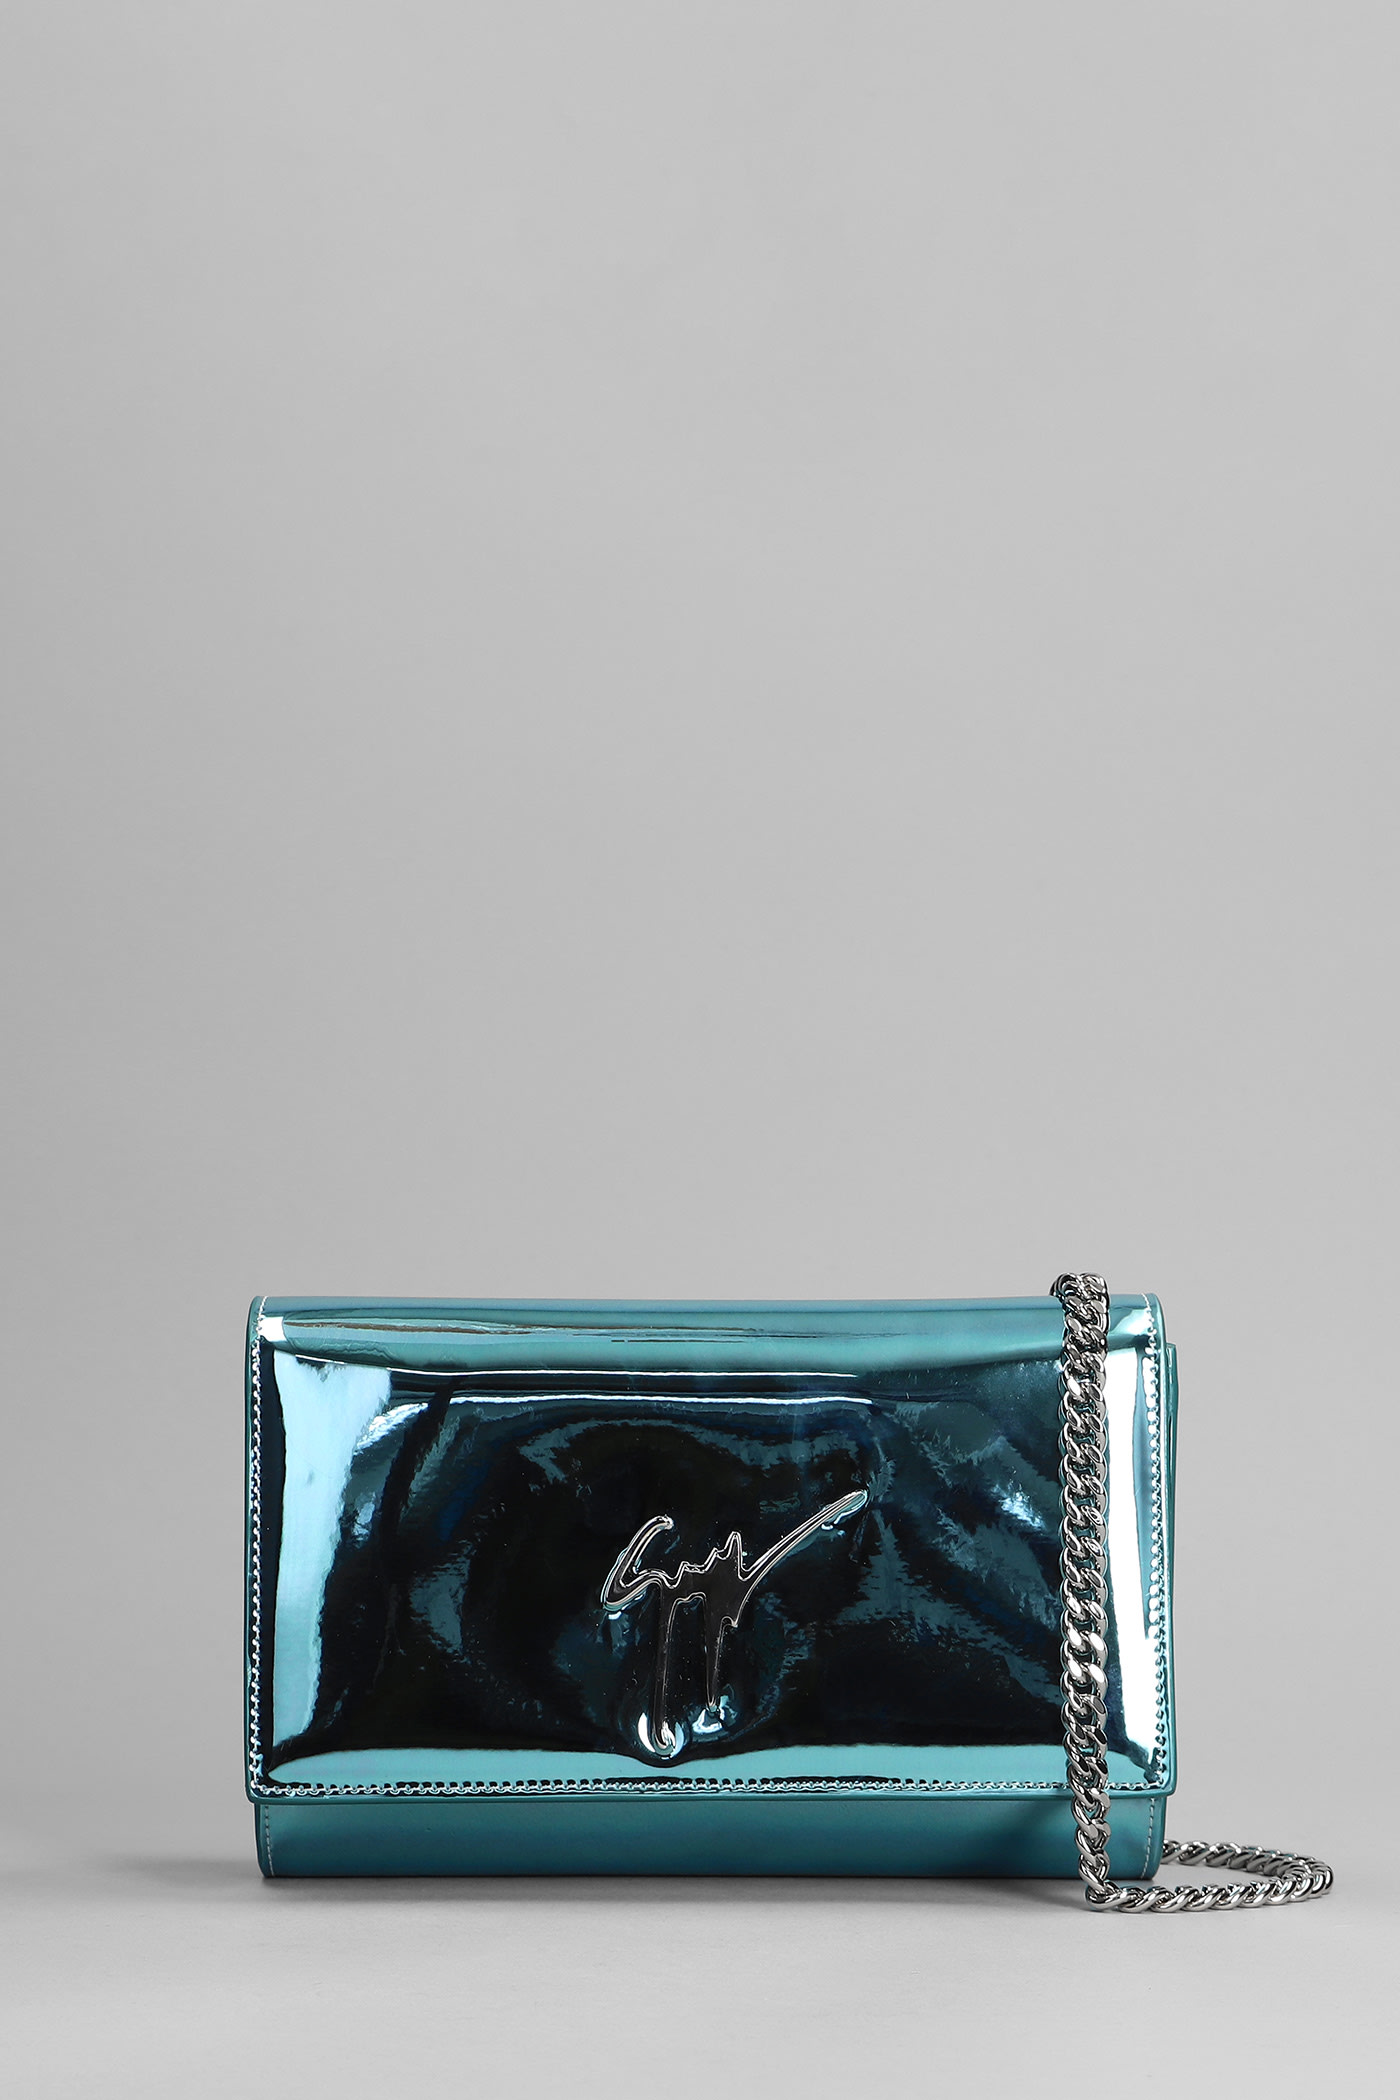 Giuseppe Zanotti Cleopatra Shoulder Bag In Cyan Leather